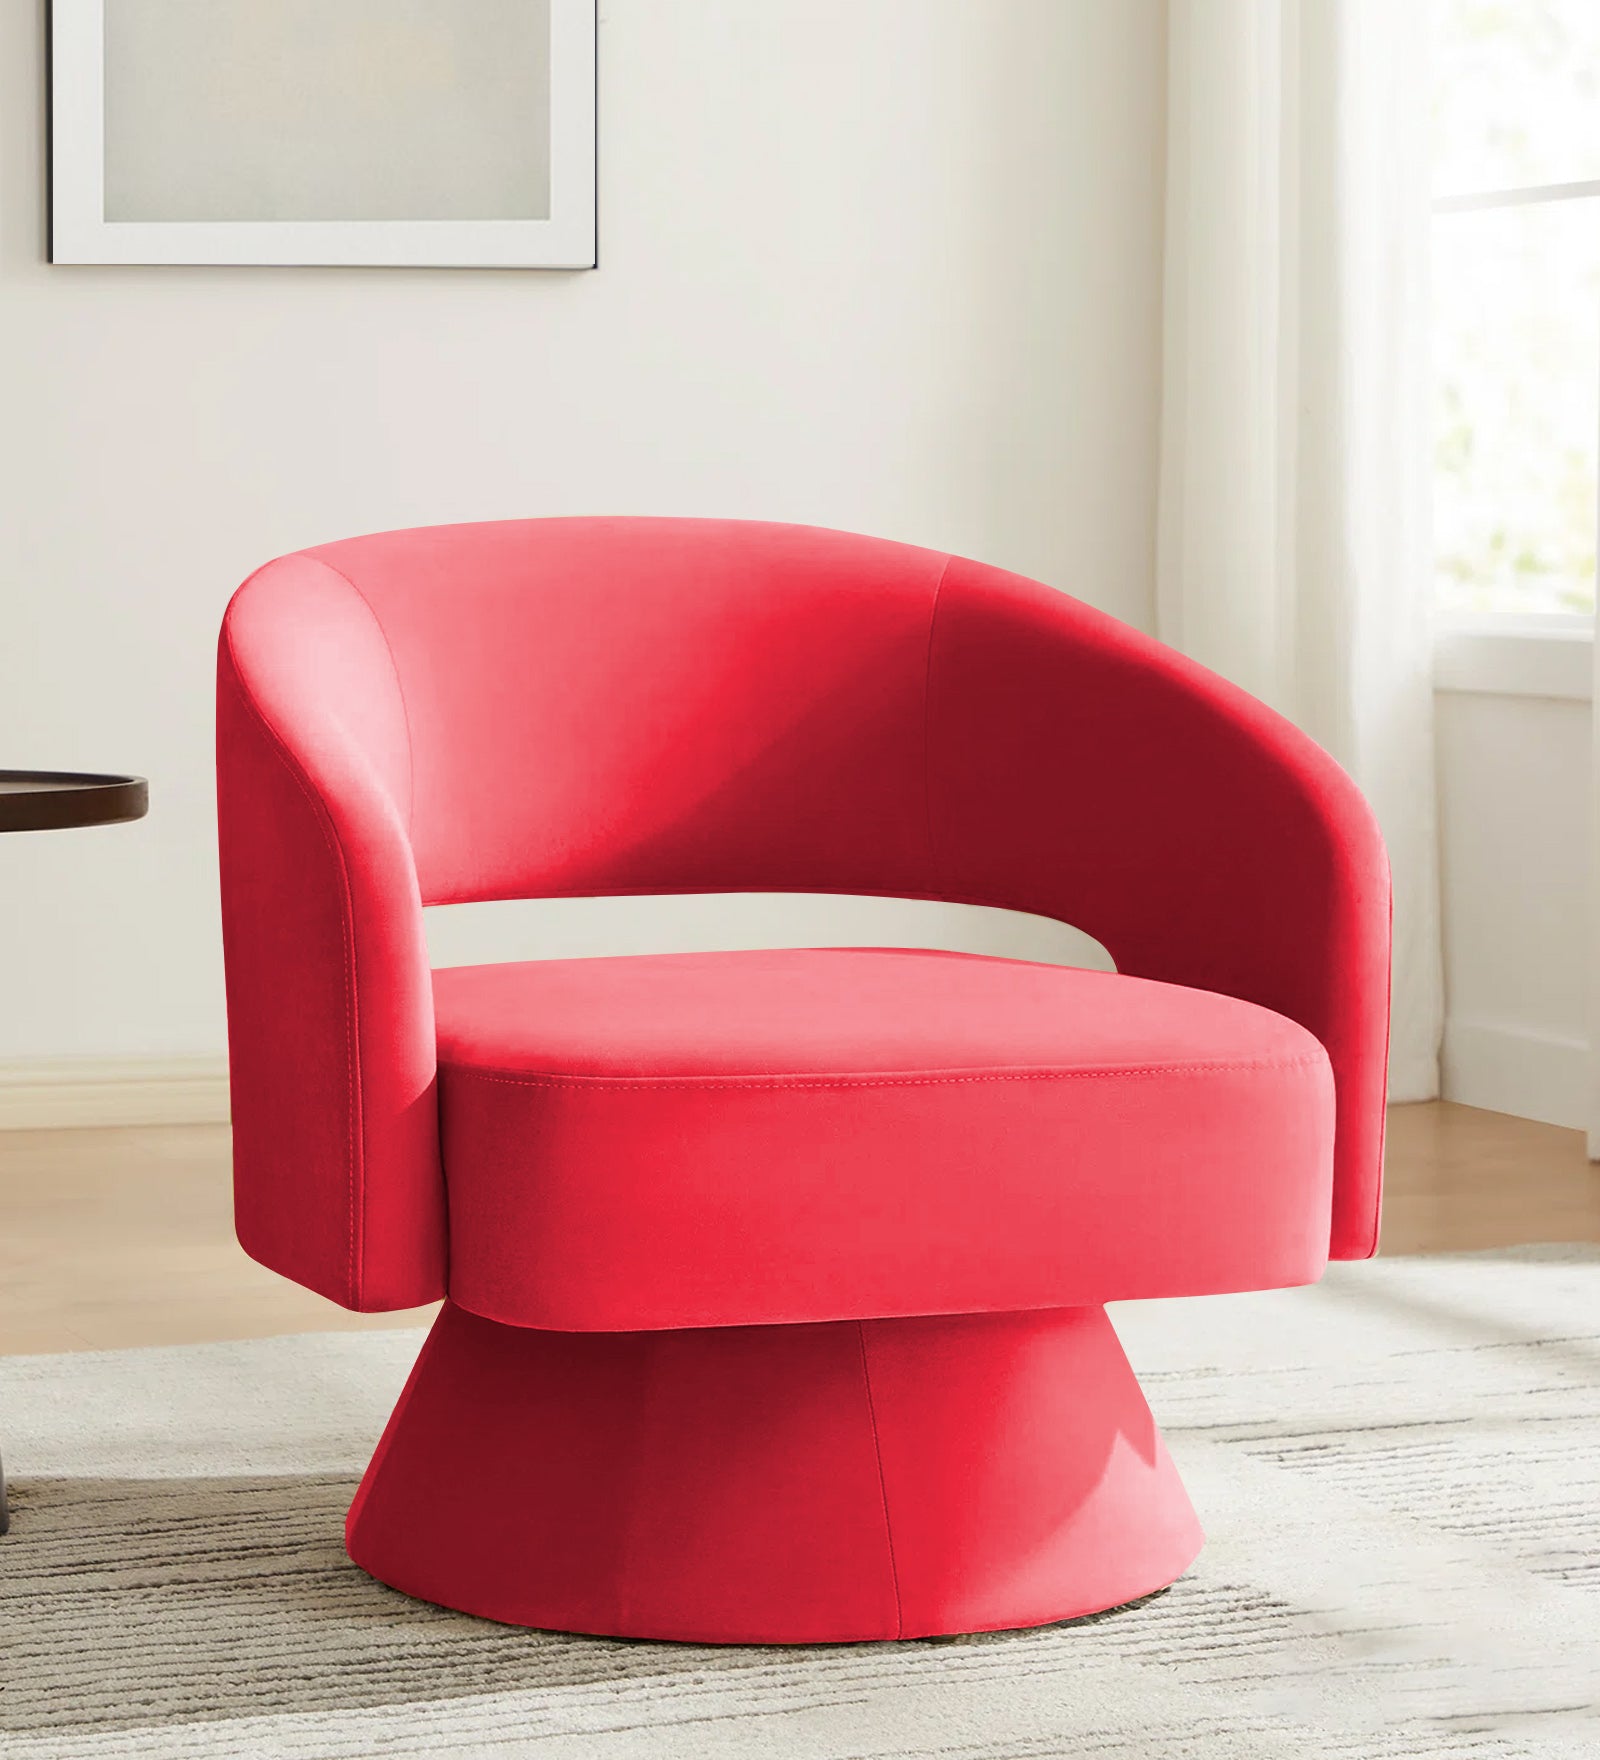 Pendra Velvet Swivel Chair in Ox Blood Maroon Colour